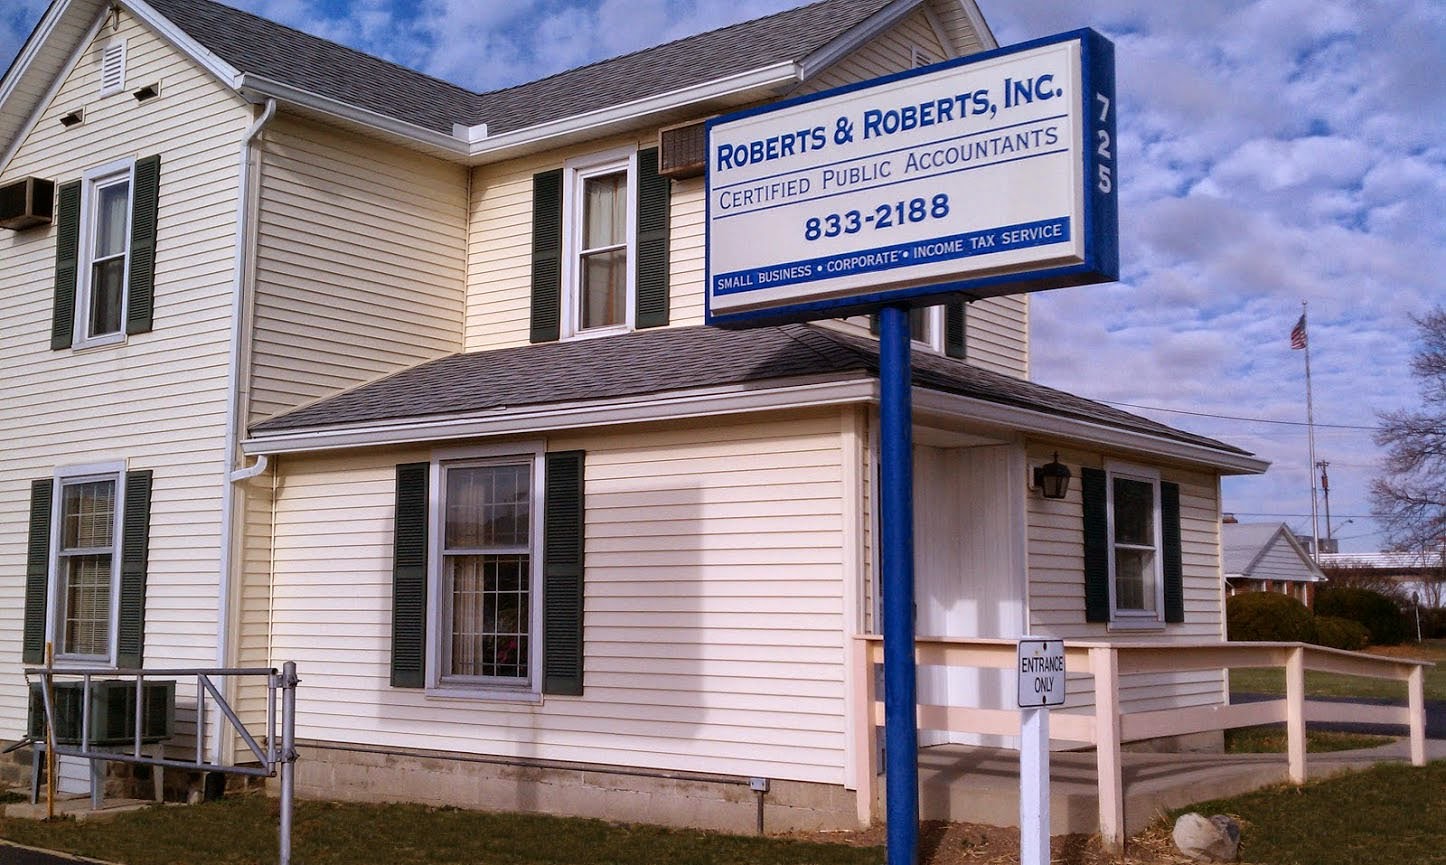 Roberts & Roberts CPA's, Inc. 725 Arlington Rd, Brookville Ohio 45309